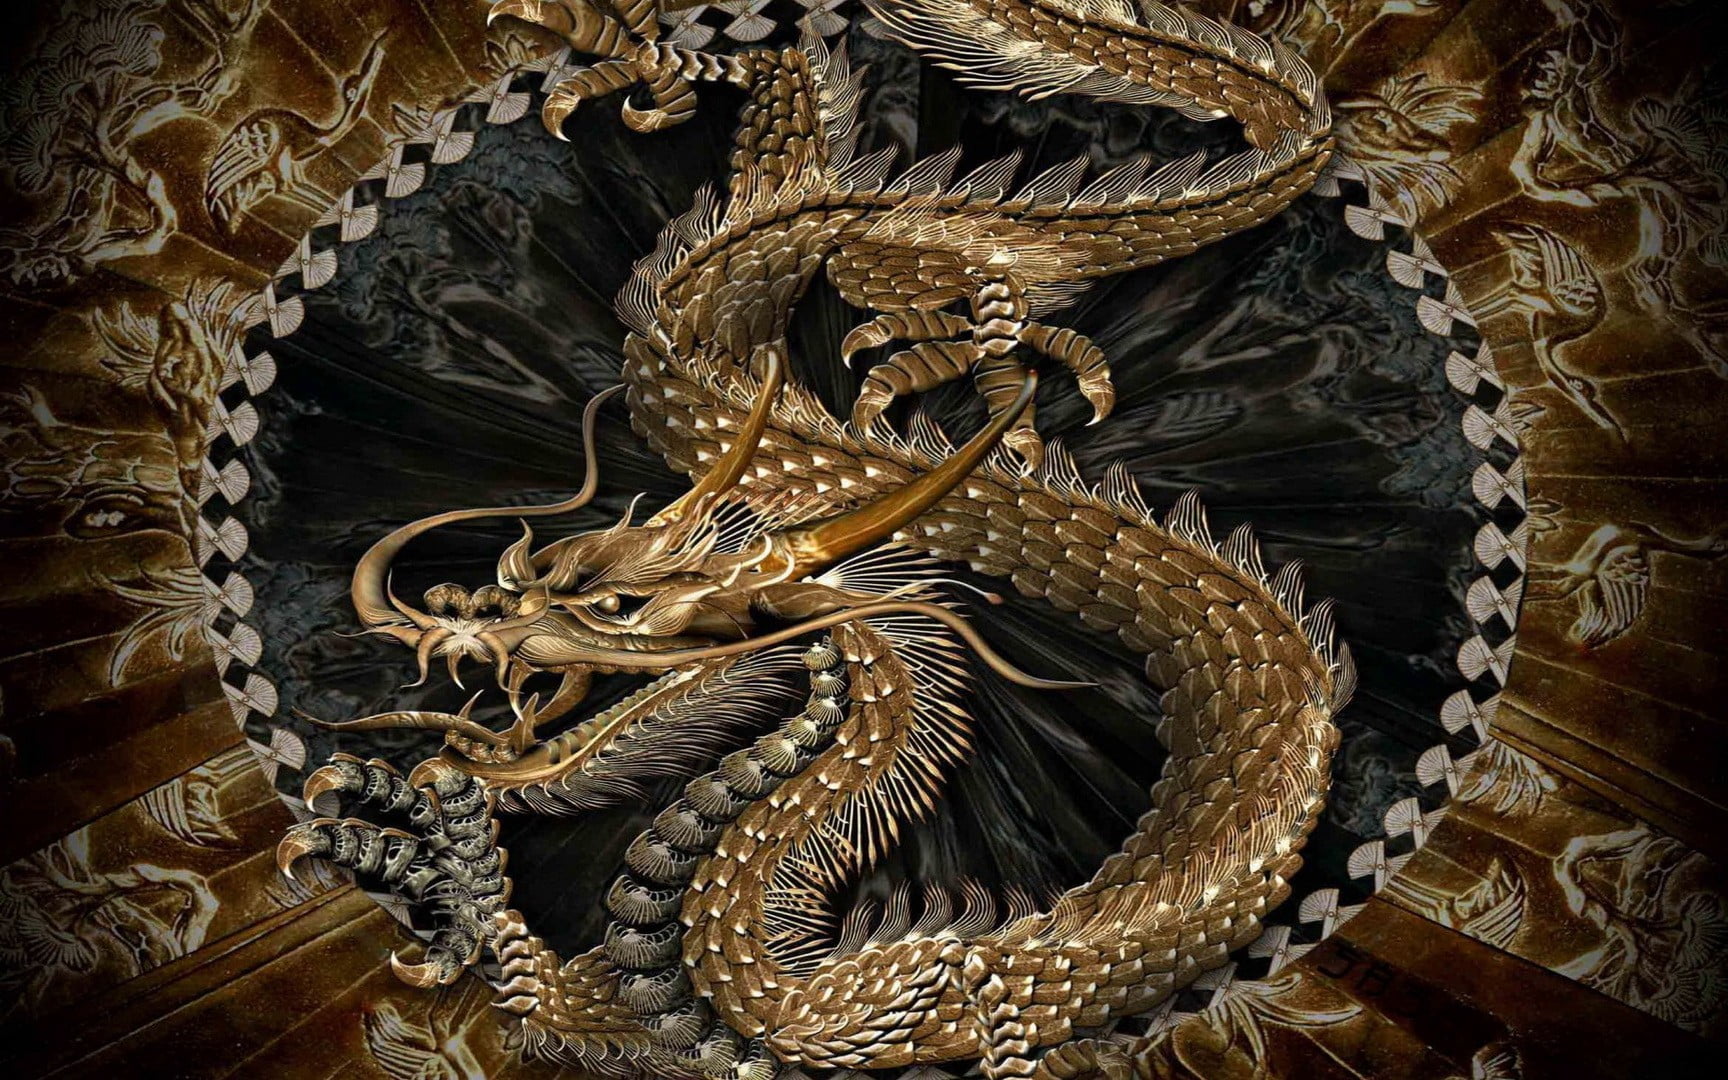 gold and silver dragon illustration, chinese dragon, animal themes